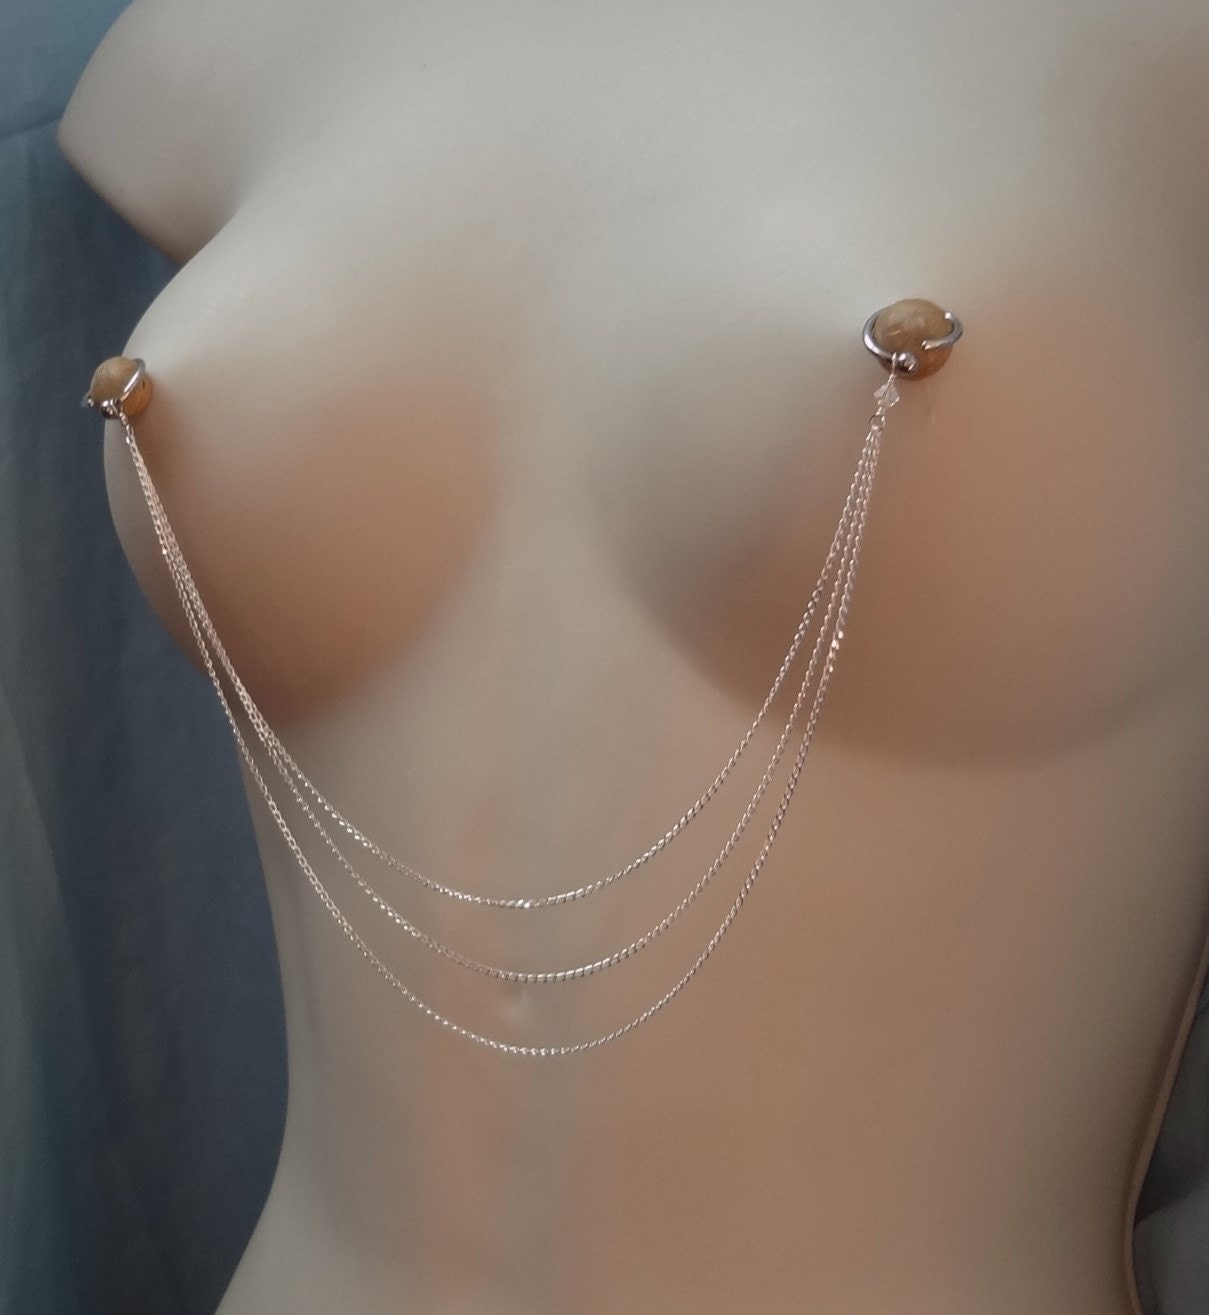 Pierced Nipple Jewelry 10